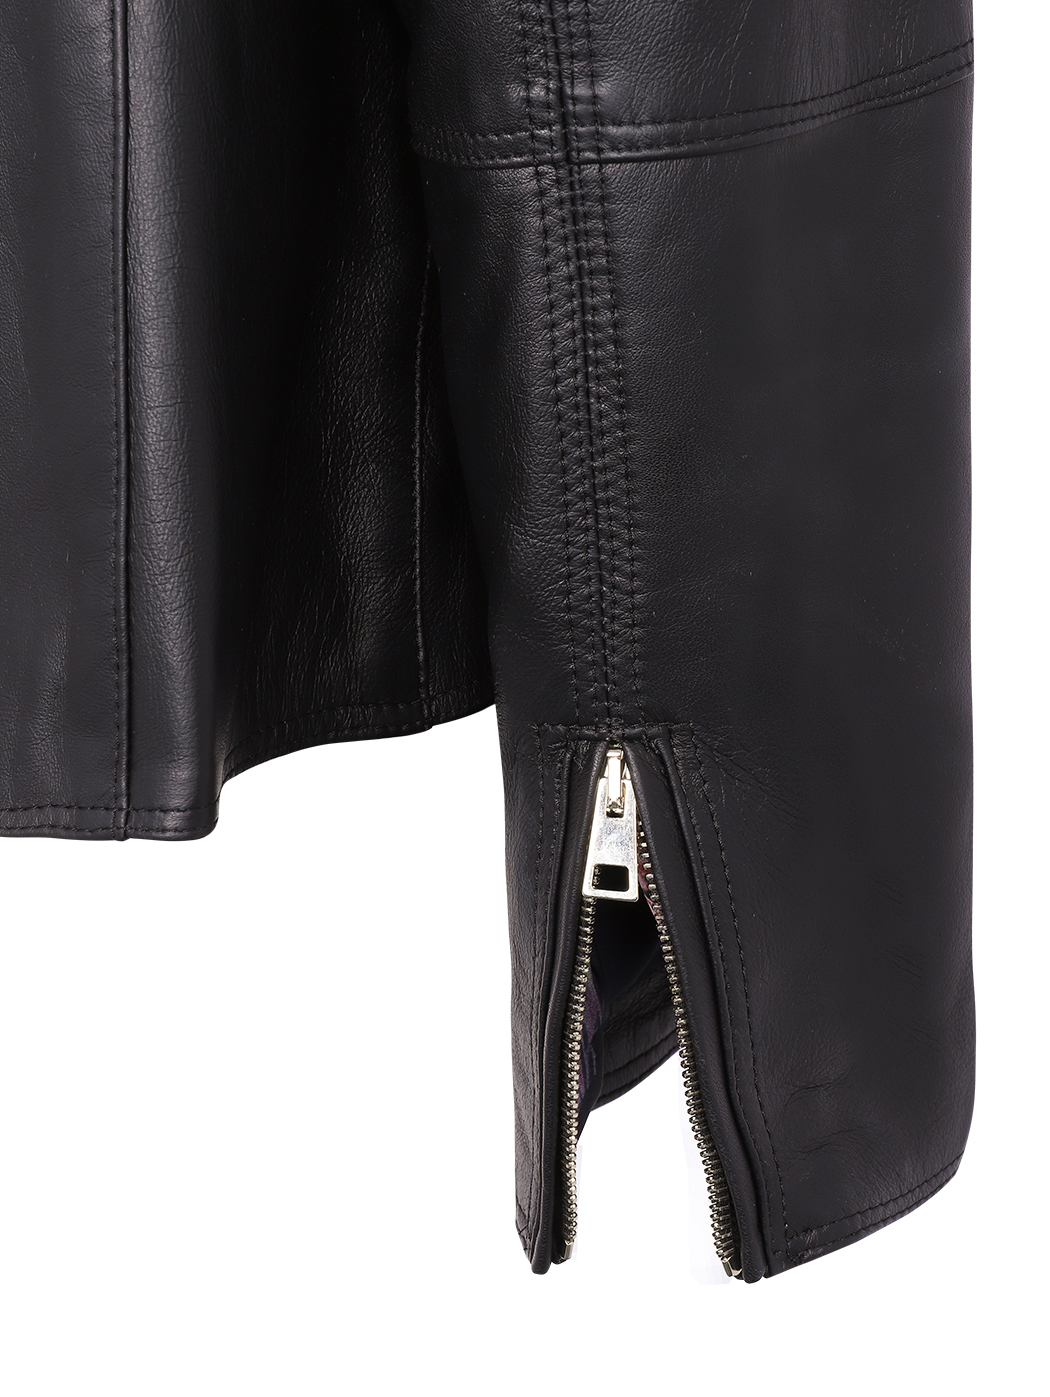 Women’s calibrated black leather jacket